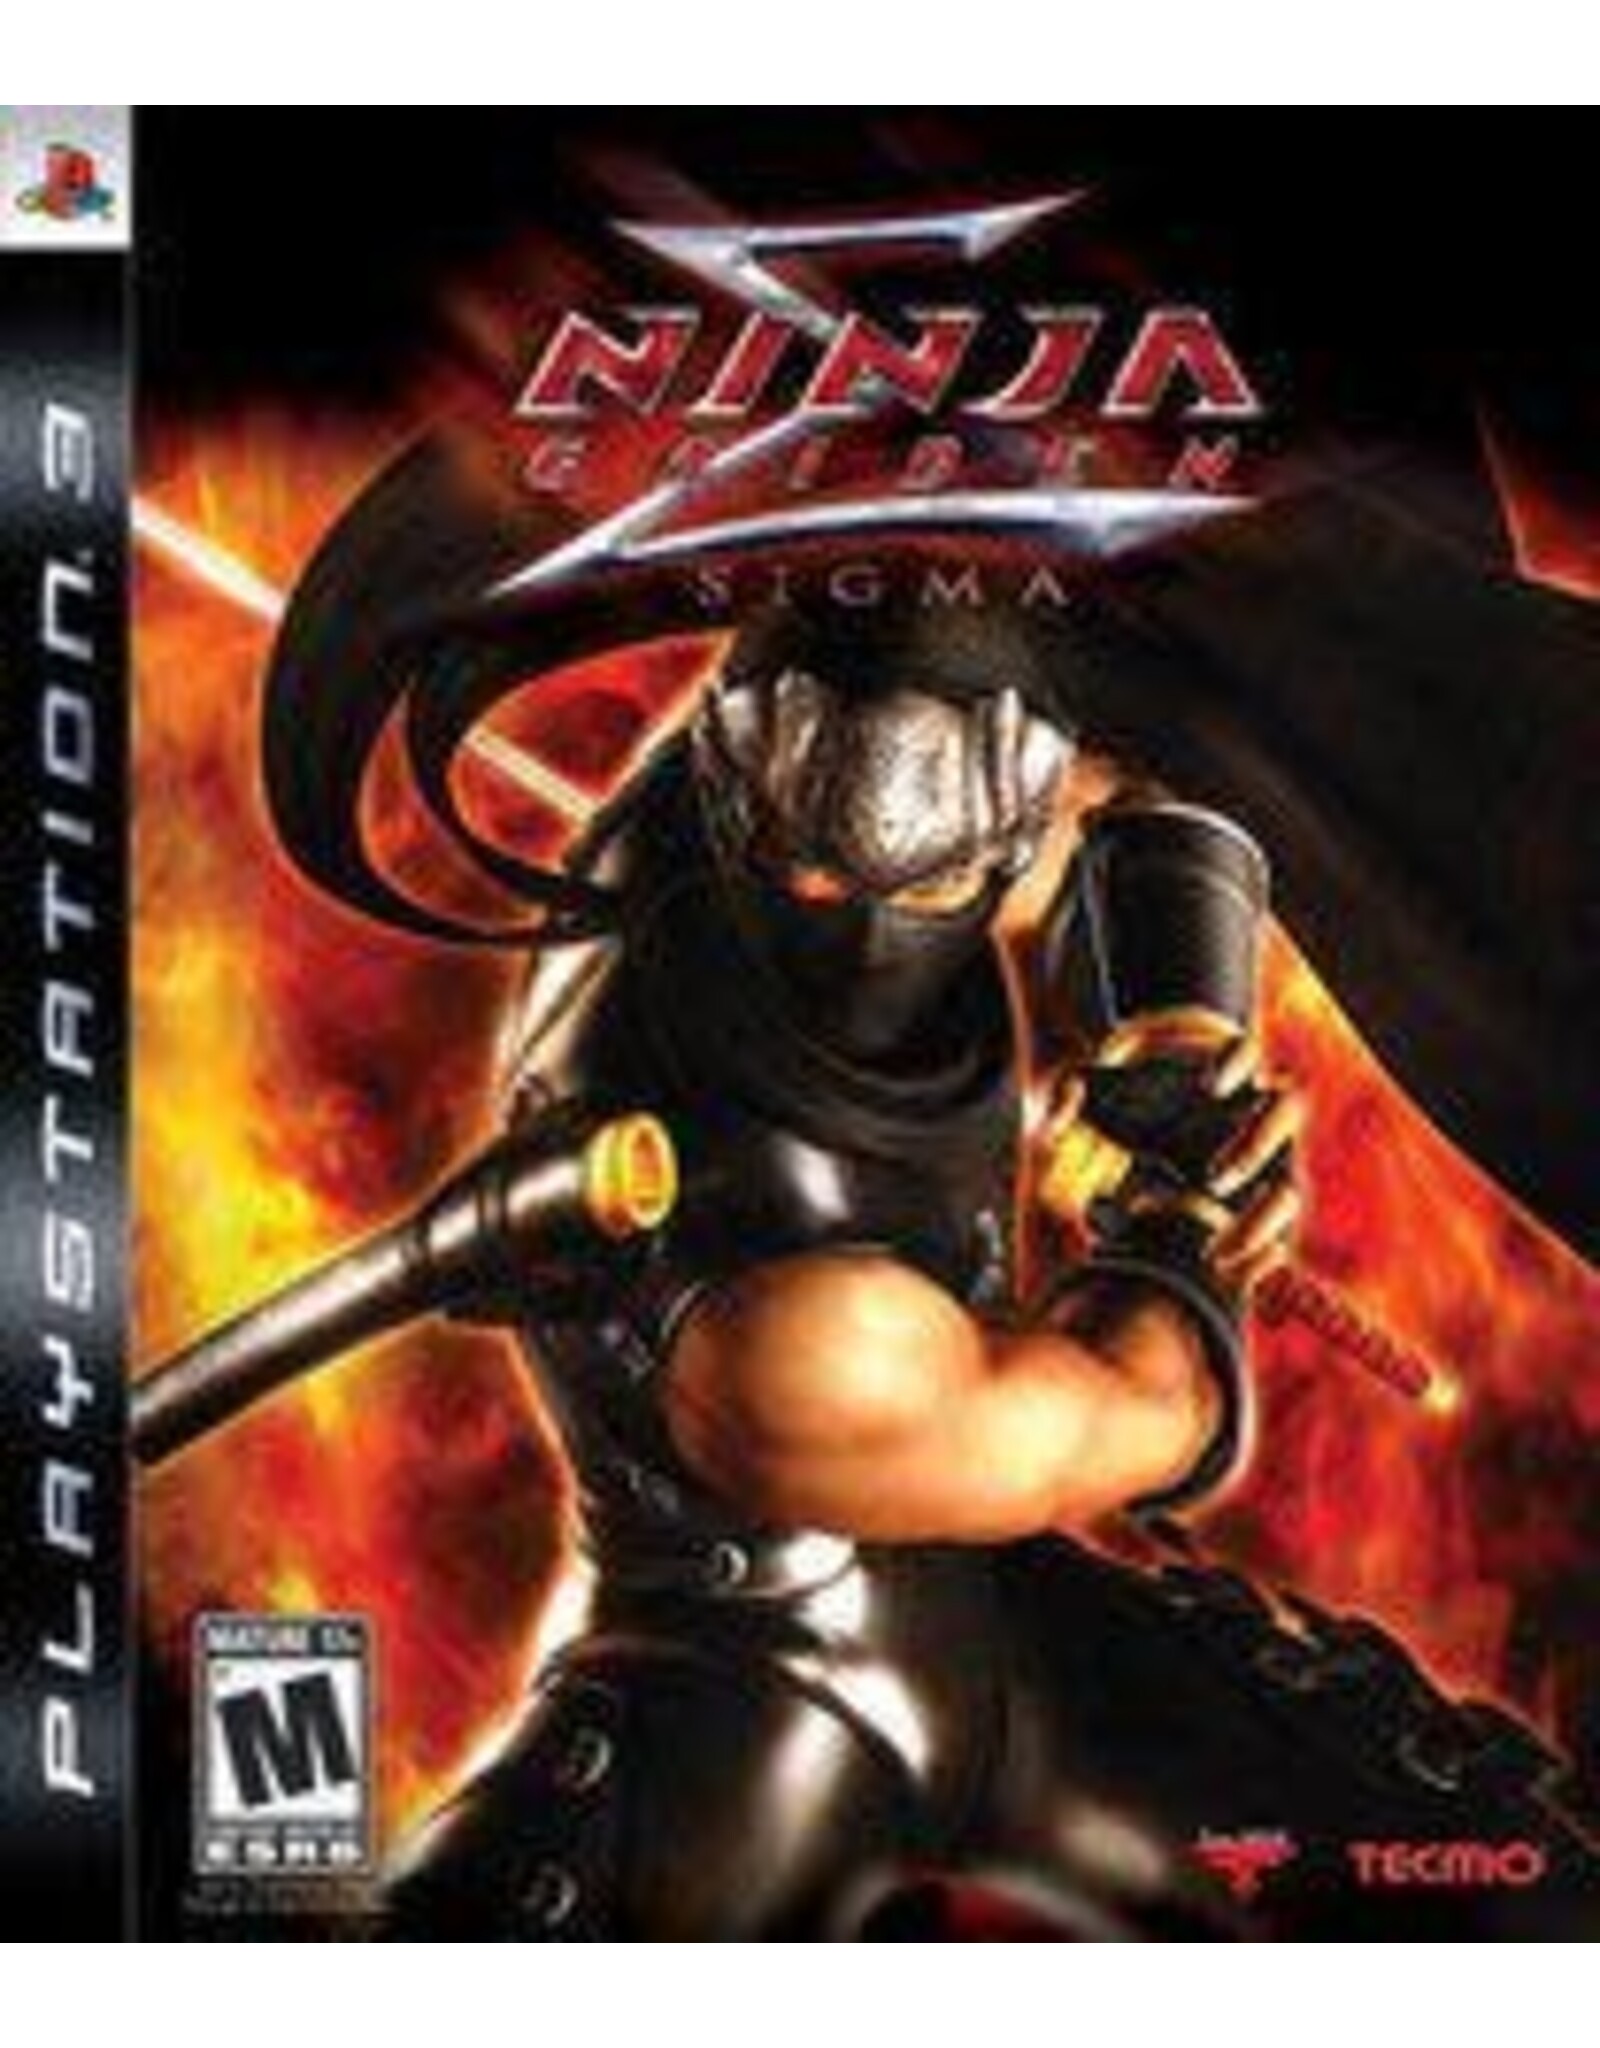 Playstation 3 Ninja Gaiden Sigma (Brand New)